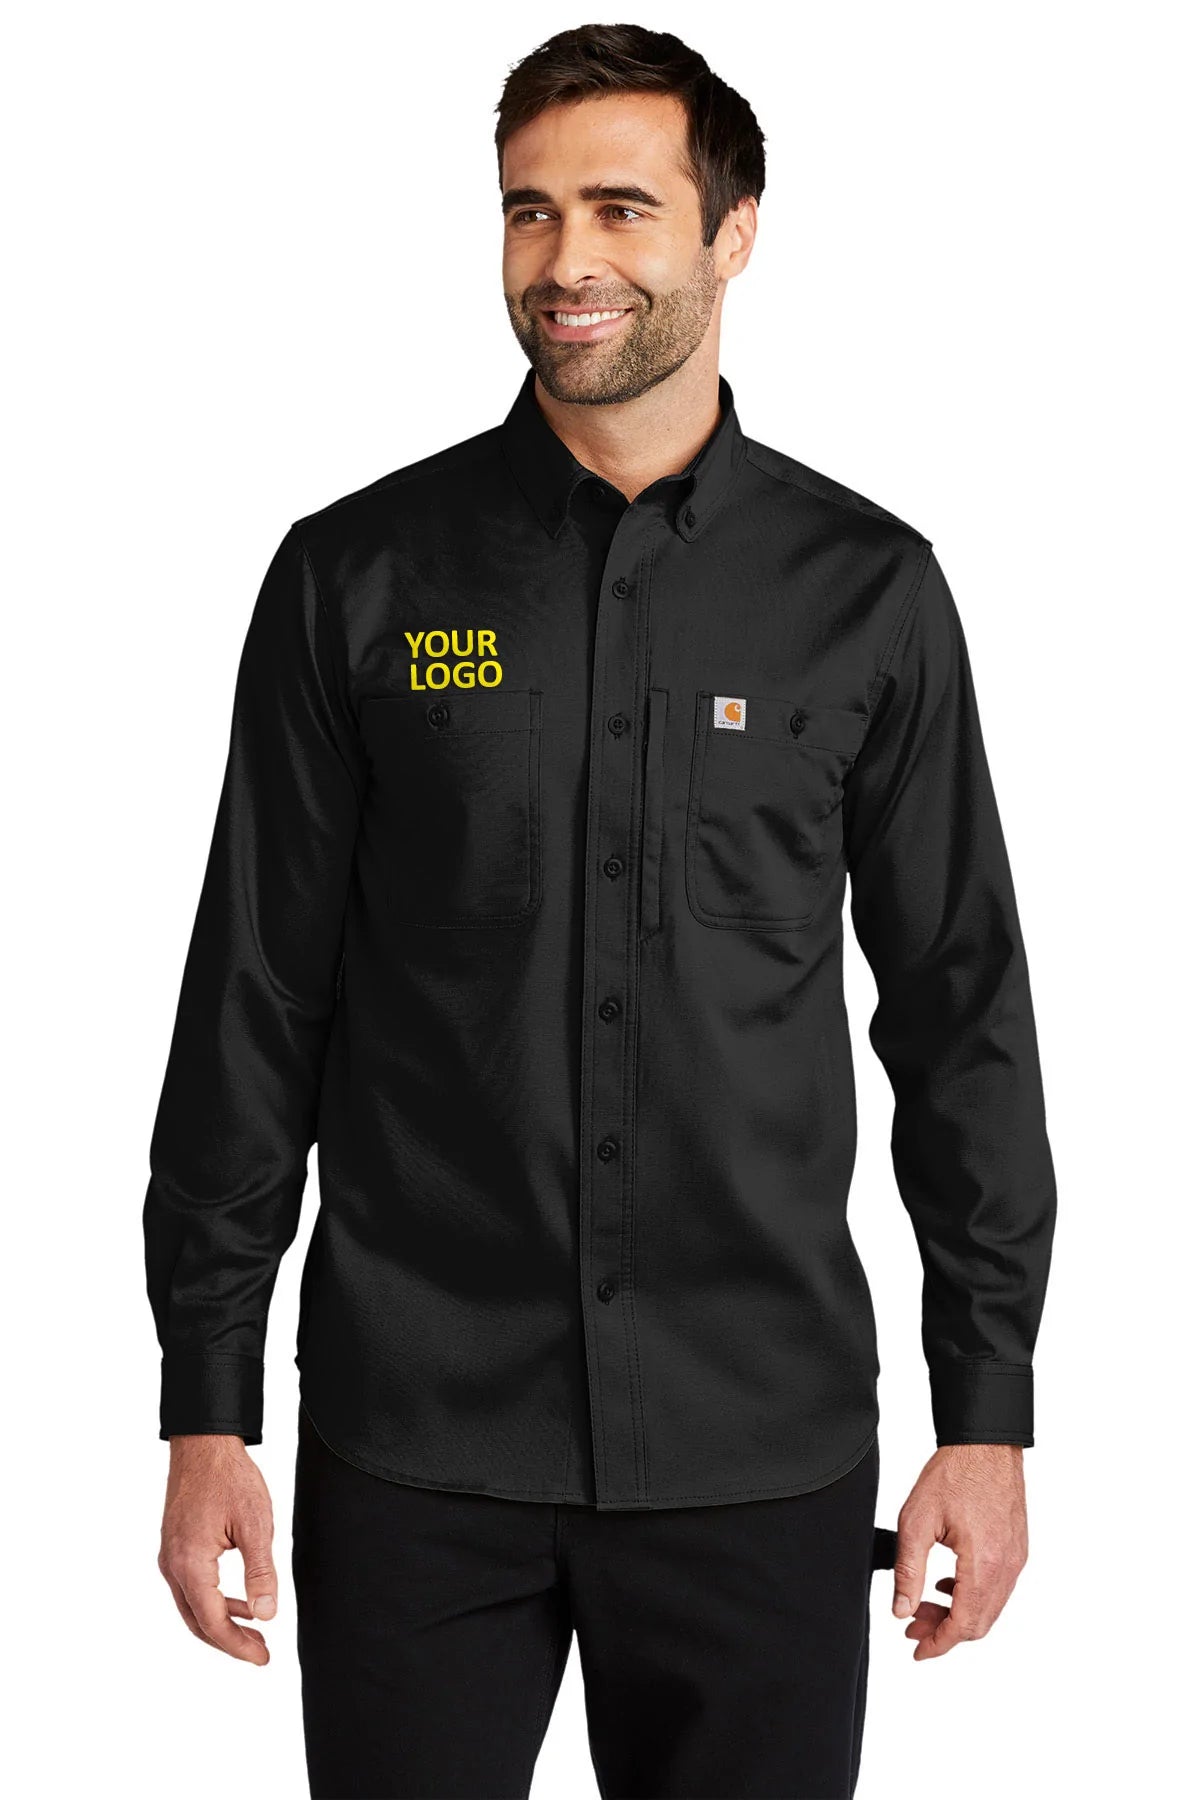 Carhartt Rugged Professional Series Long Sleeve Shirt CT102538 Black